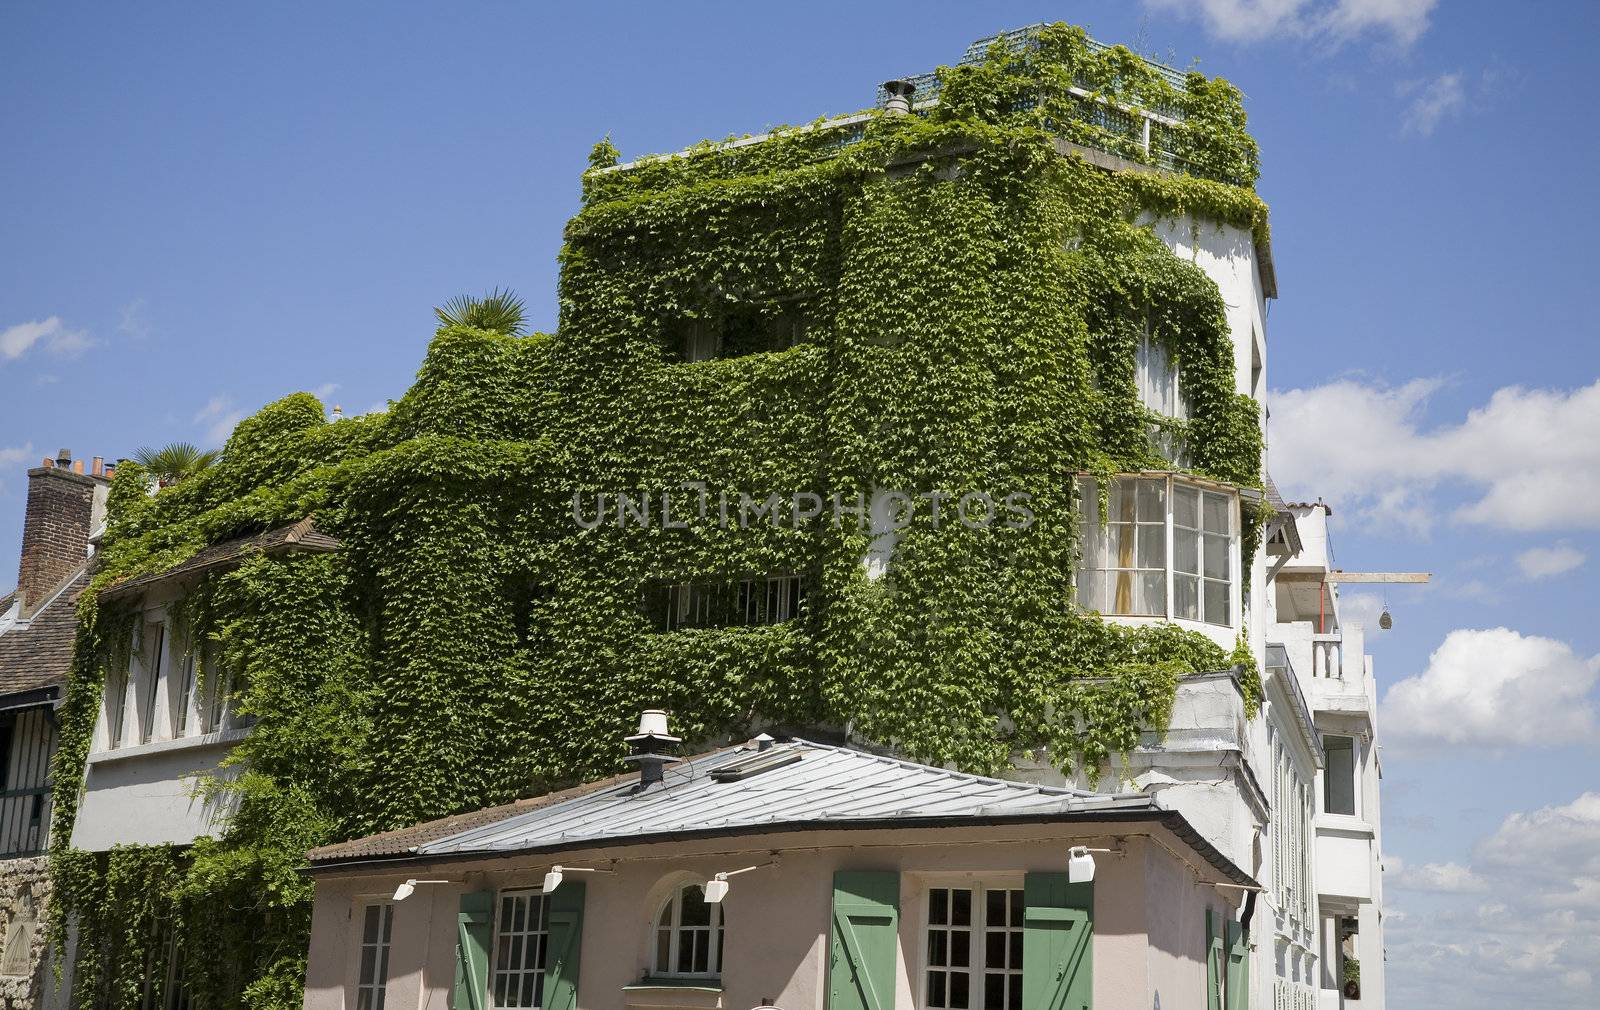 House covered by vine - Montmartre, Paris.